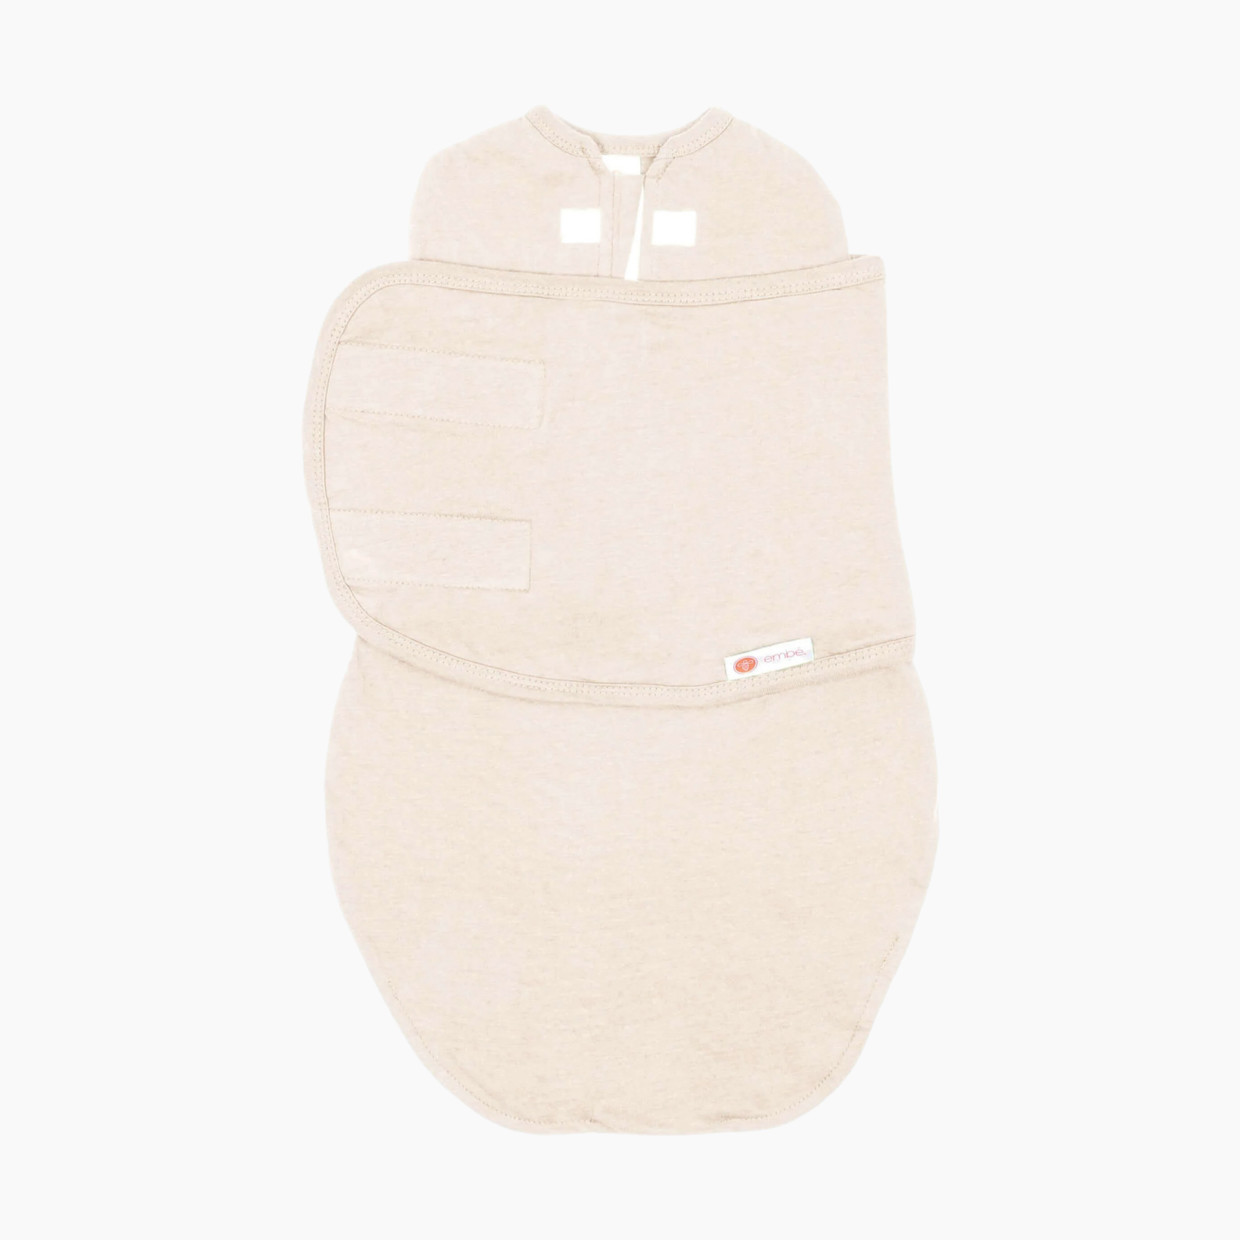 Embe Babies Starter Swaddle Wrap - Cream, Newborn 6-14lbs.